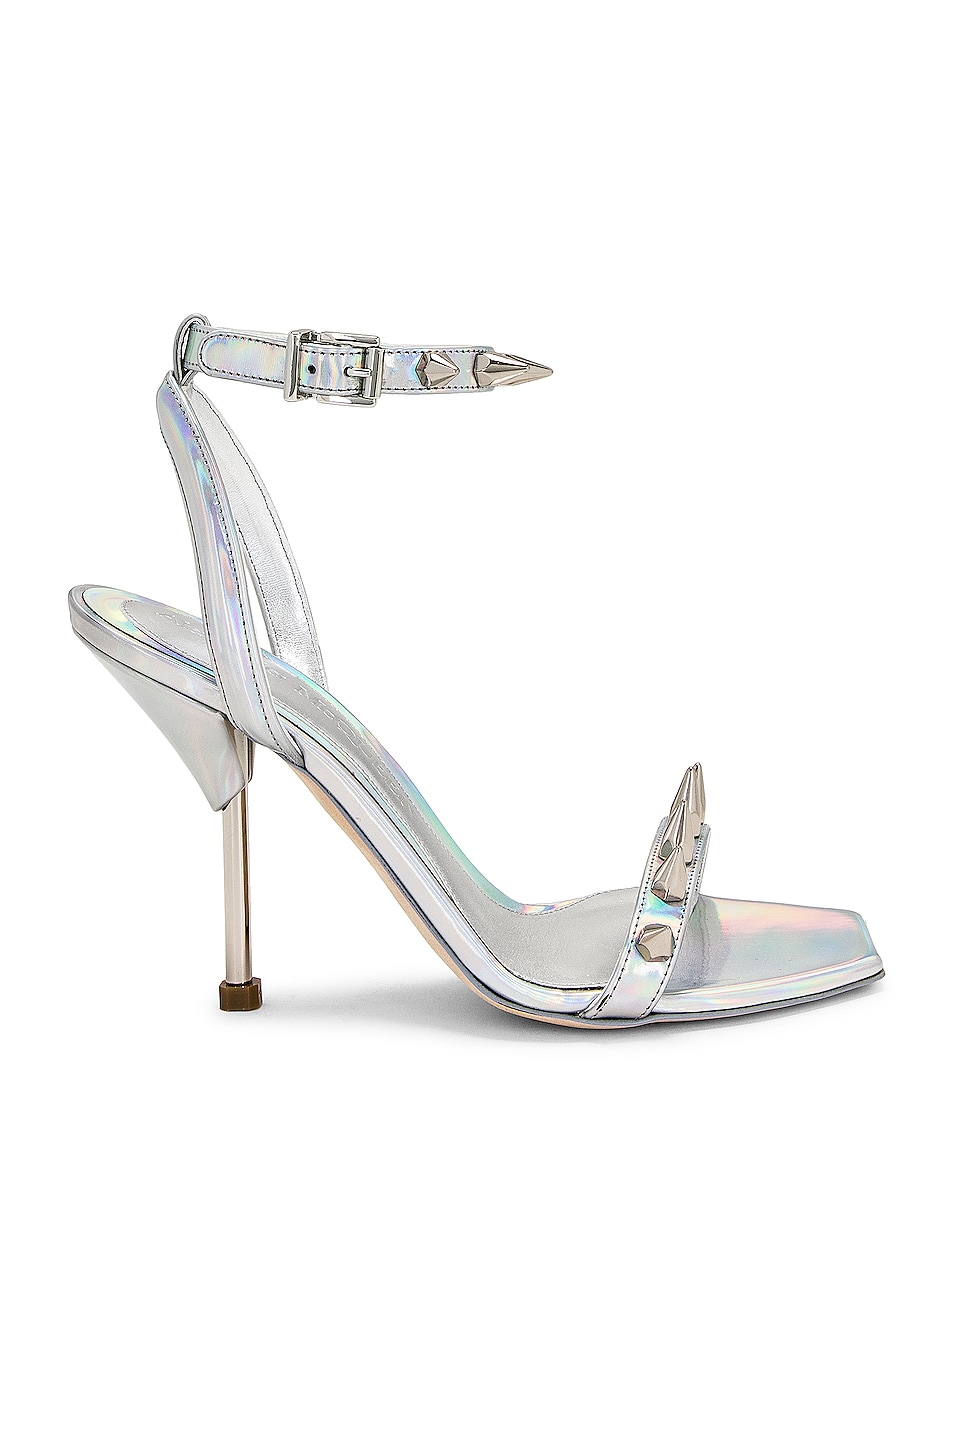 Alexander McQueen Spike High Heel Sandals in Silver Holographic ...